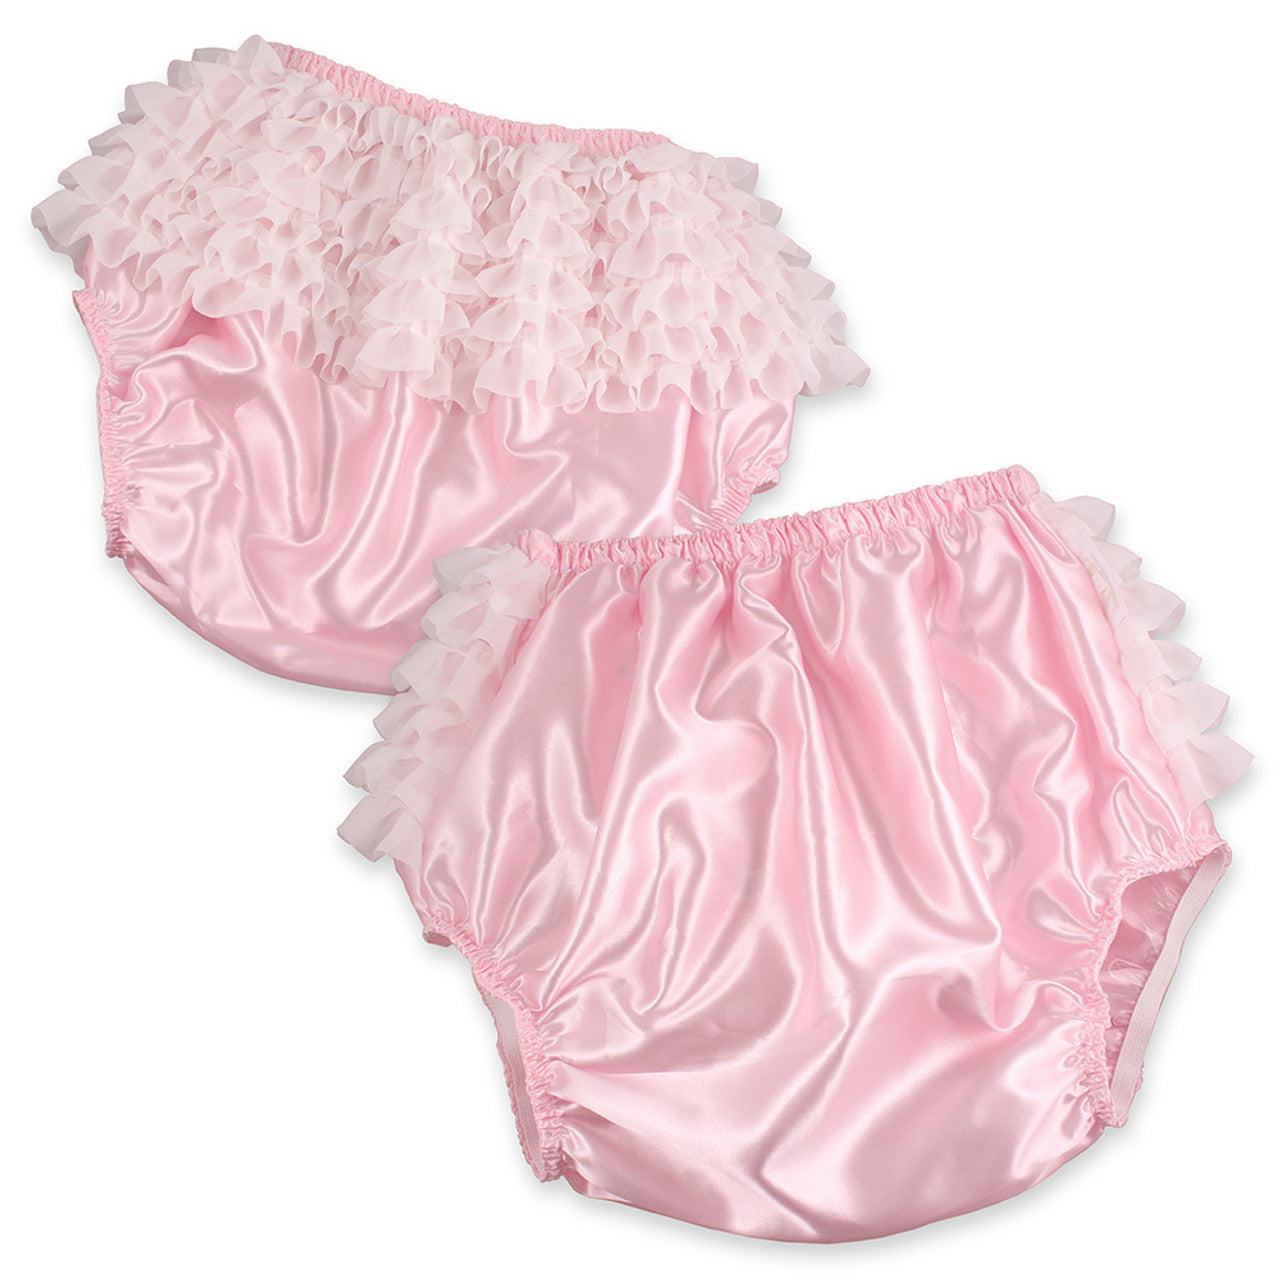 Rearz - Pink Satin Rhumba Plastic Panties